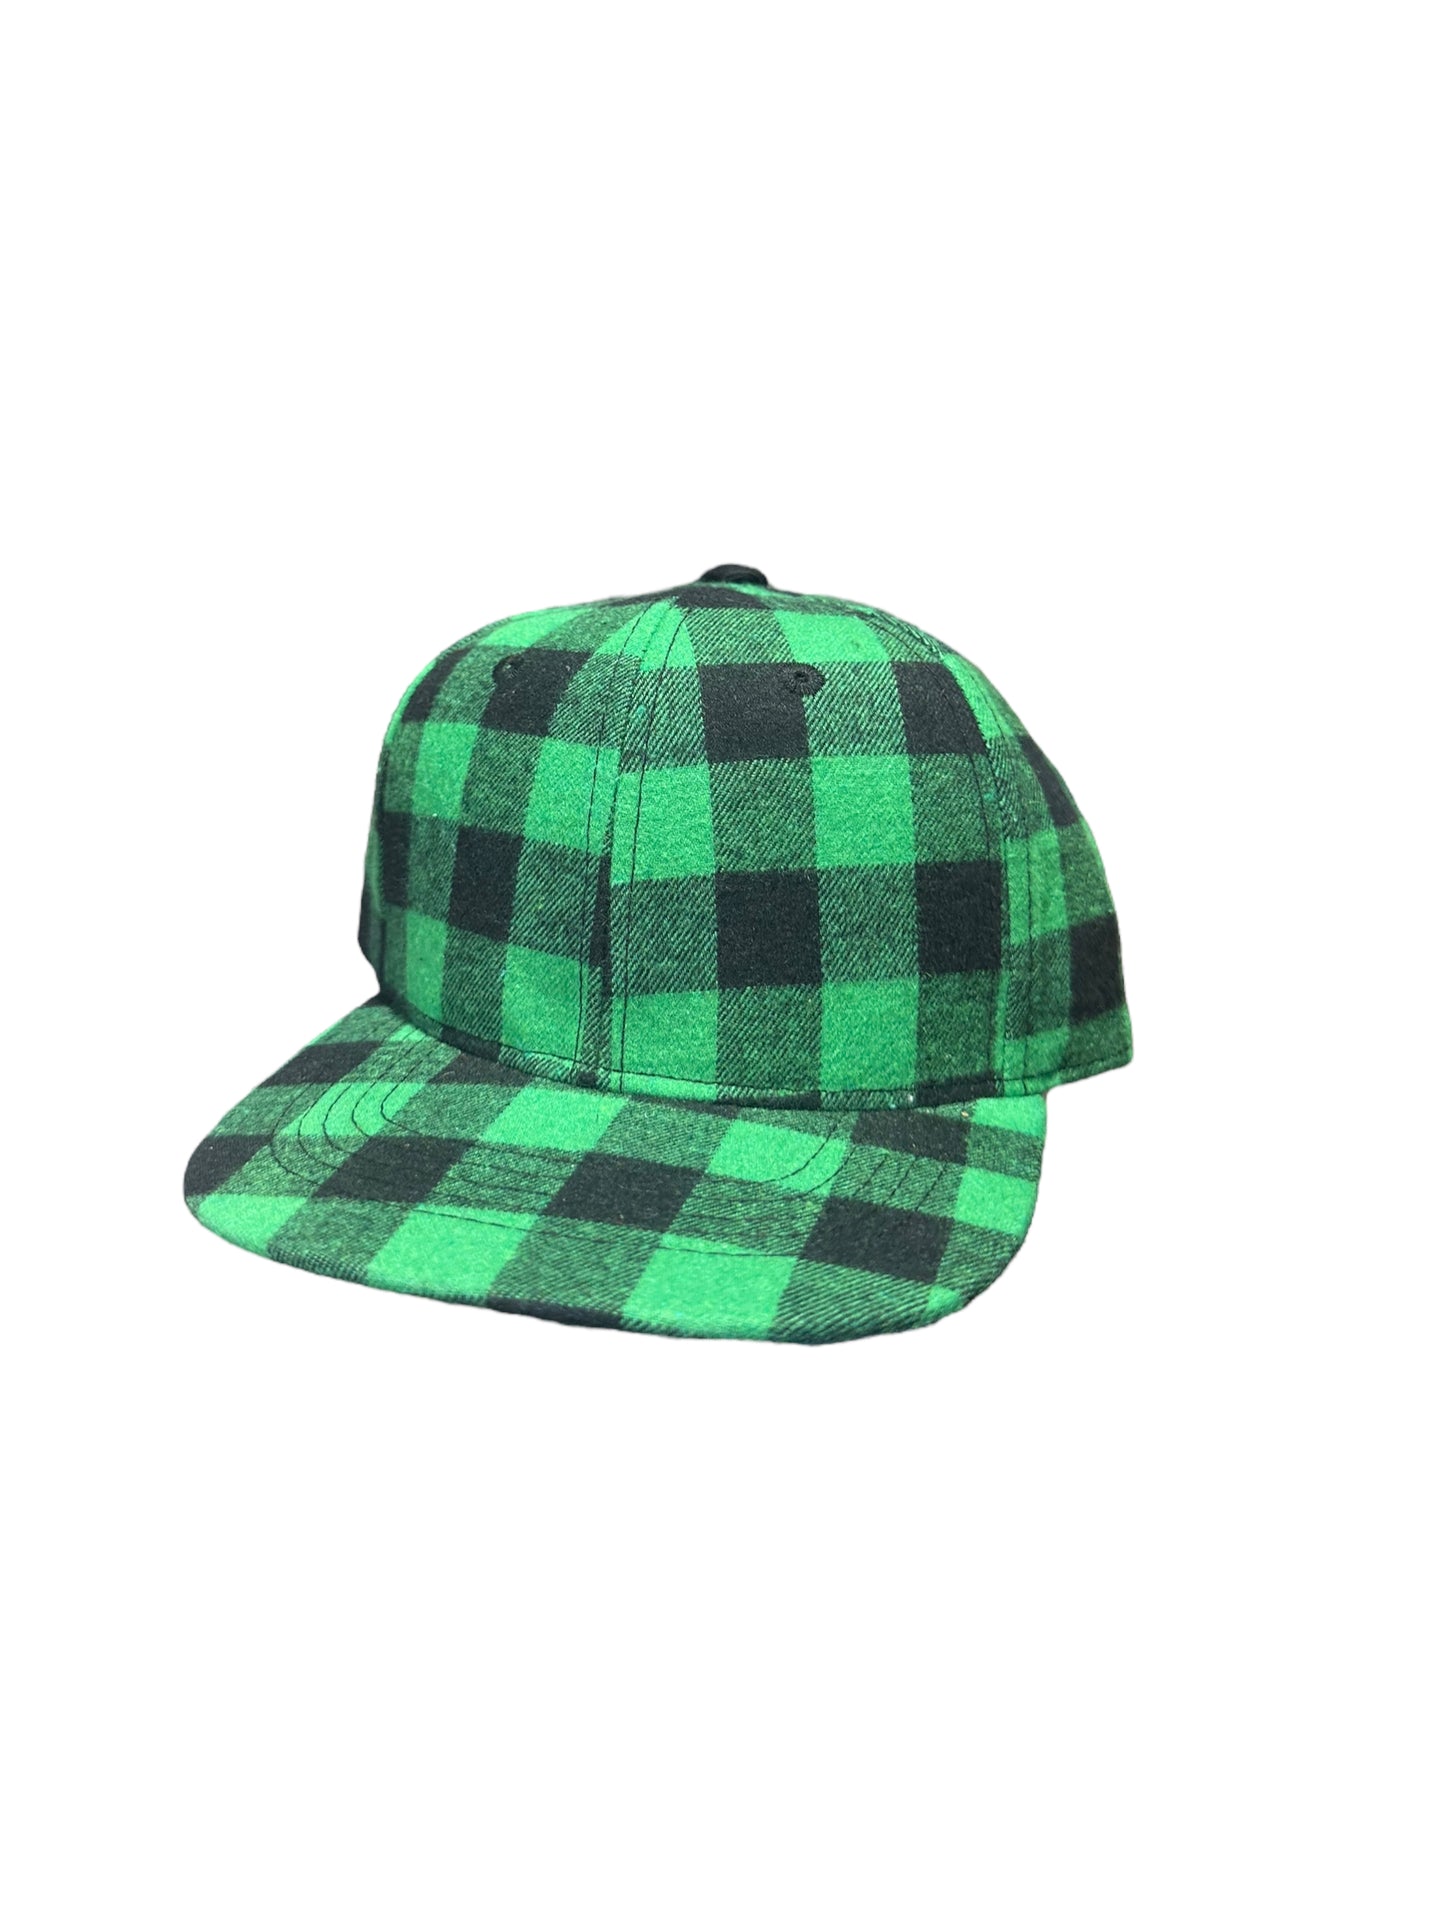 Baby hats- Green plaid SnapBacks